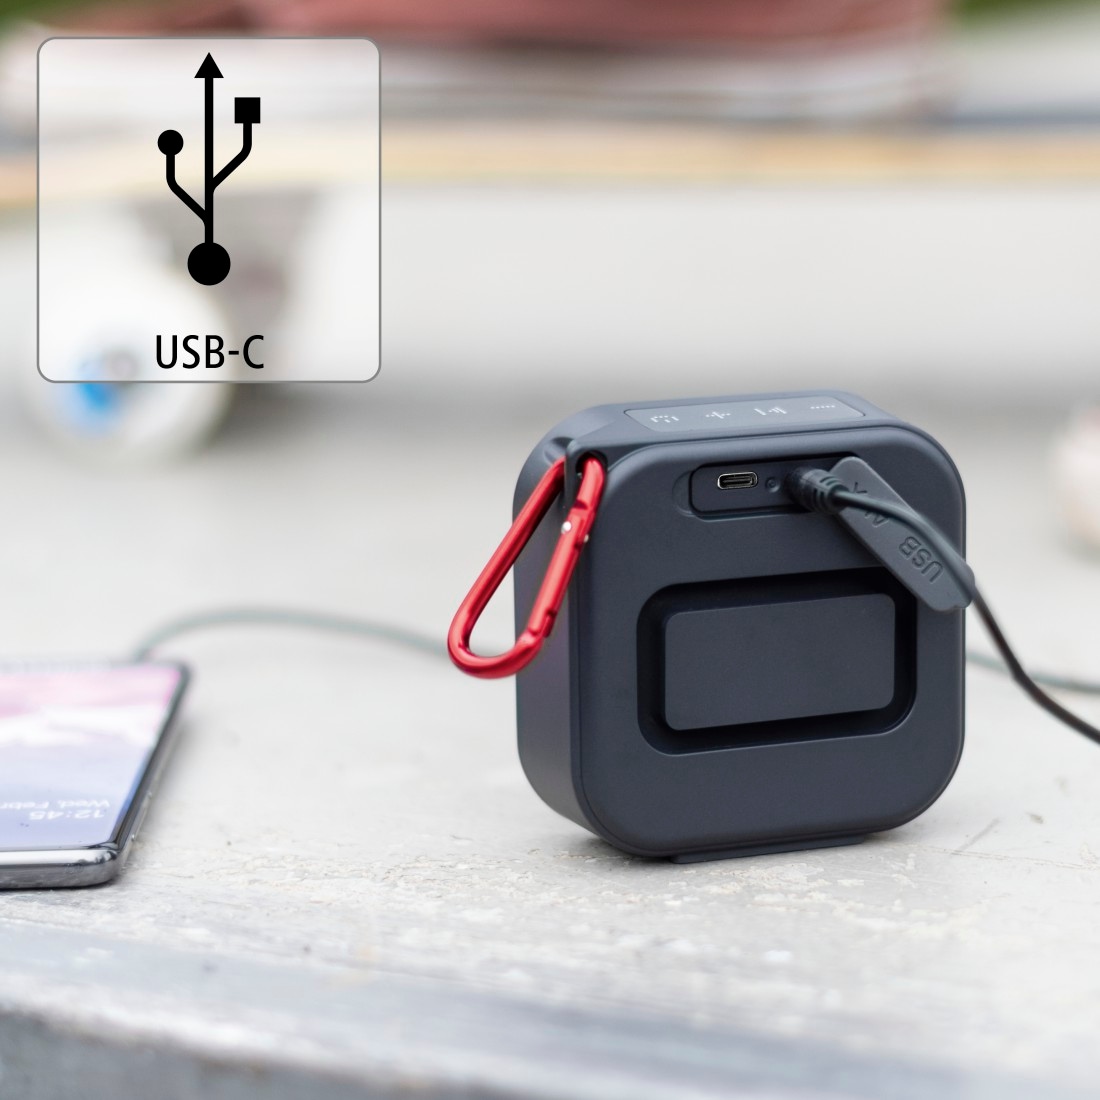 Hama Bluetooth-Lautsprecher »Mini Bluetooth Lautsprecher (wasserdicht IP67, 3,5W, mobil, Karabiner)«